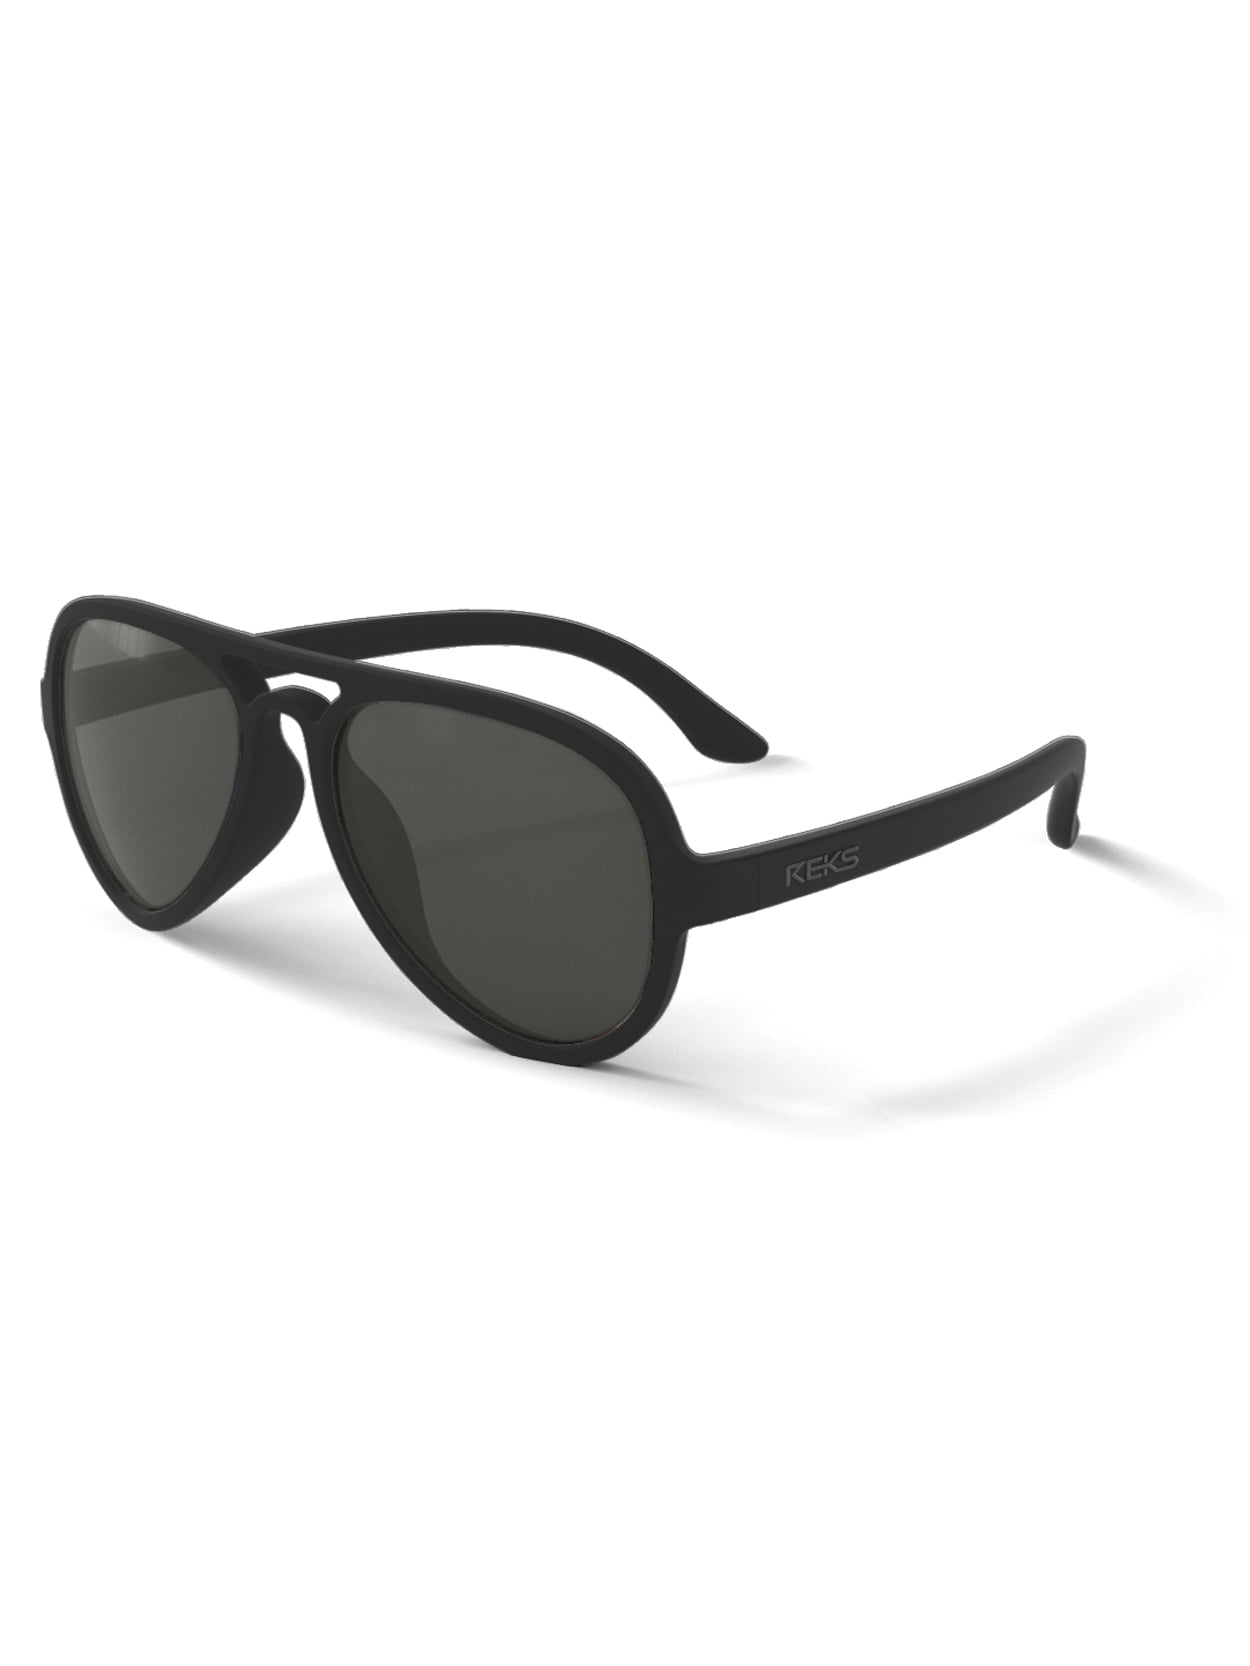 Reks Optics Aviator Golf Sunglasses, Matte Black Frame/Smoke Lens